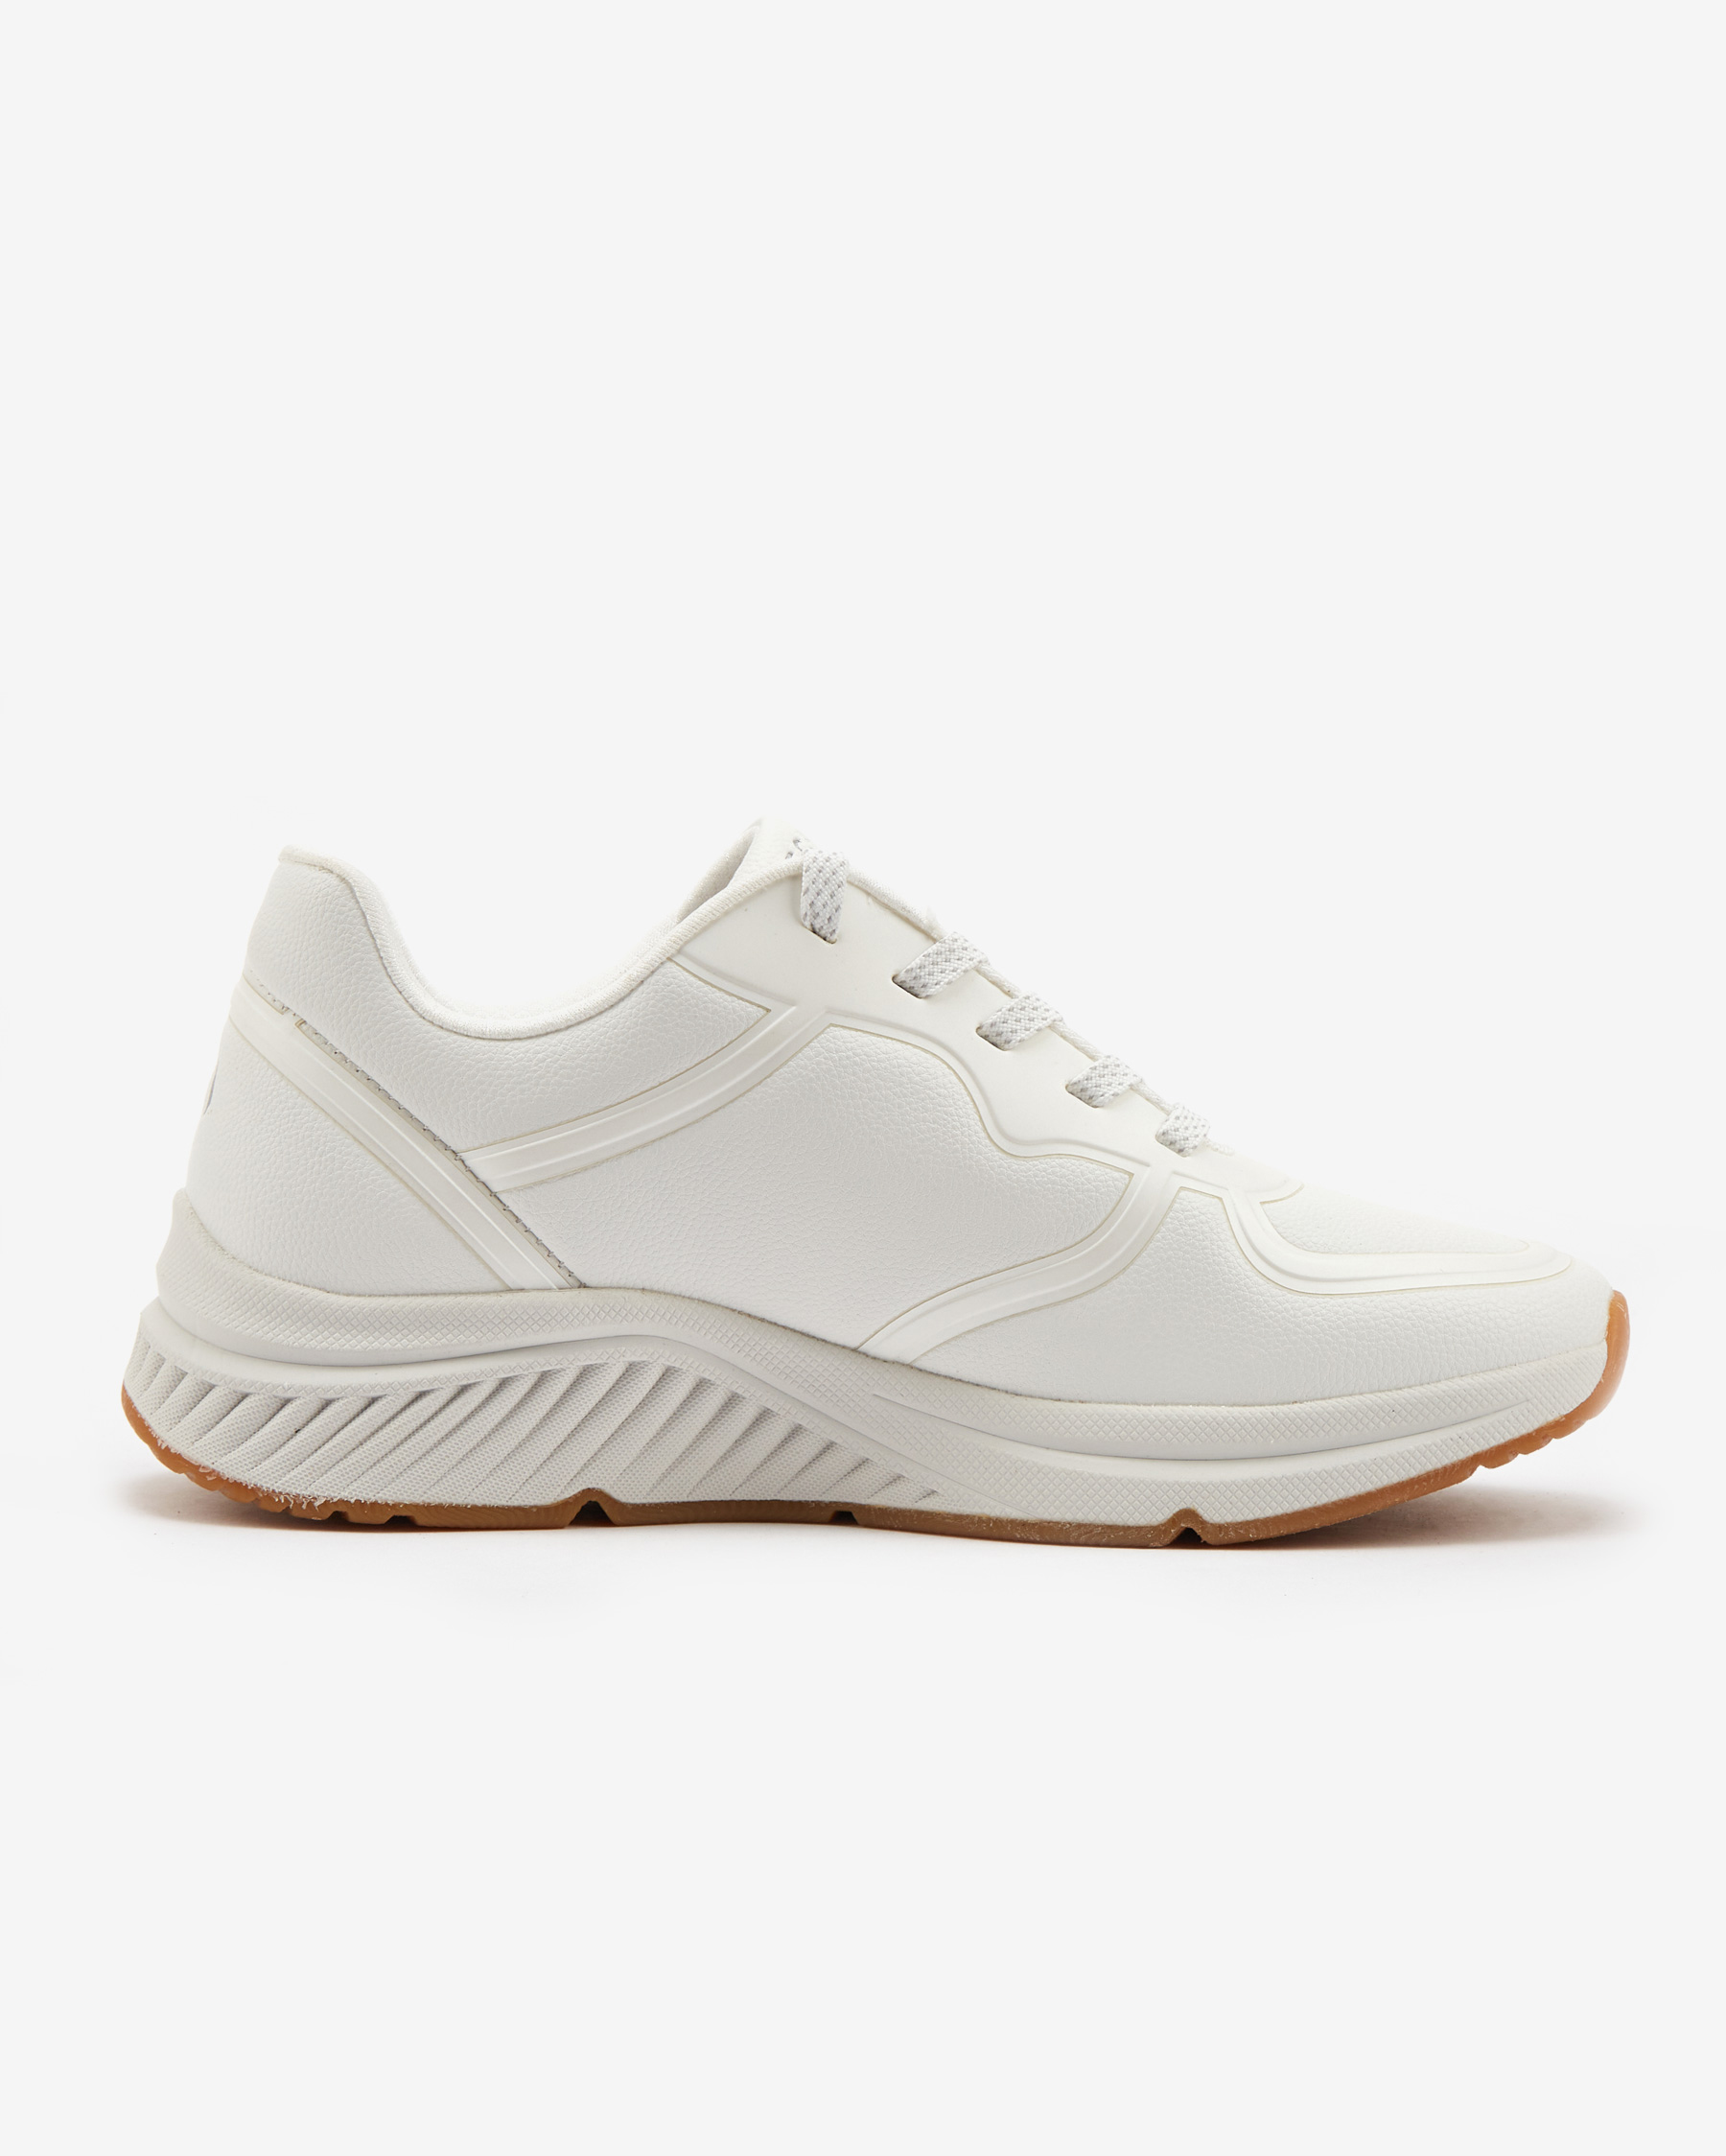 Arch Fit S-Miles- Mile Makers Kadın Beyaz Sneakers 155570 WHT